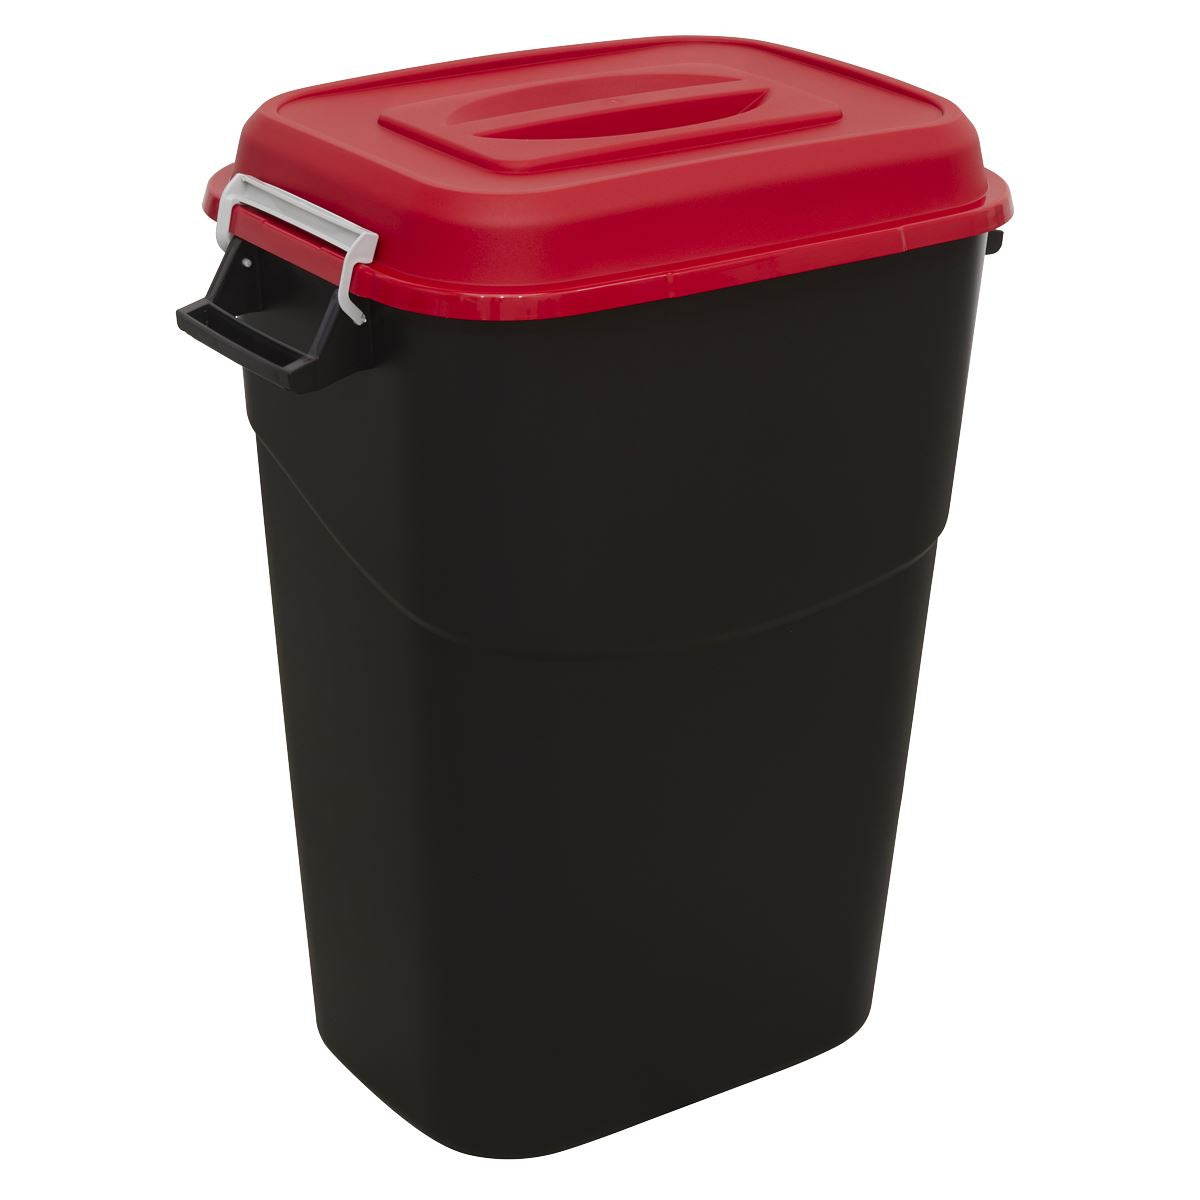 Sealey Refuse/Storage Bin 95L - Red